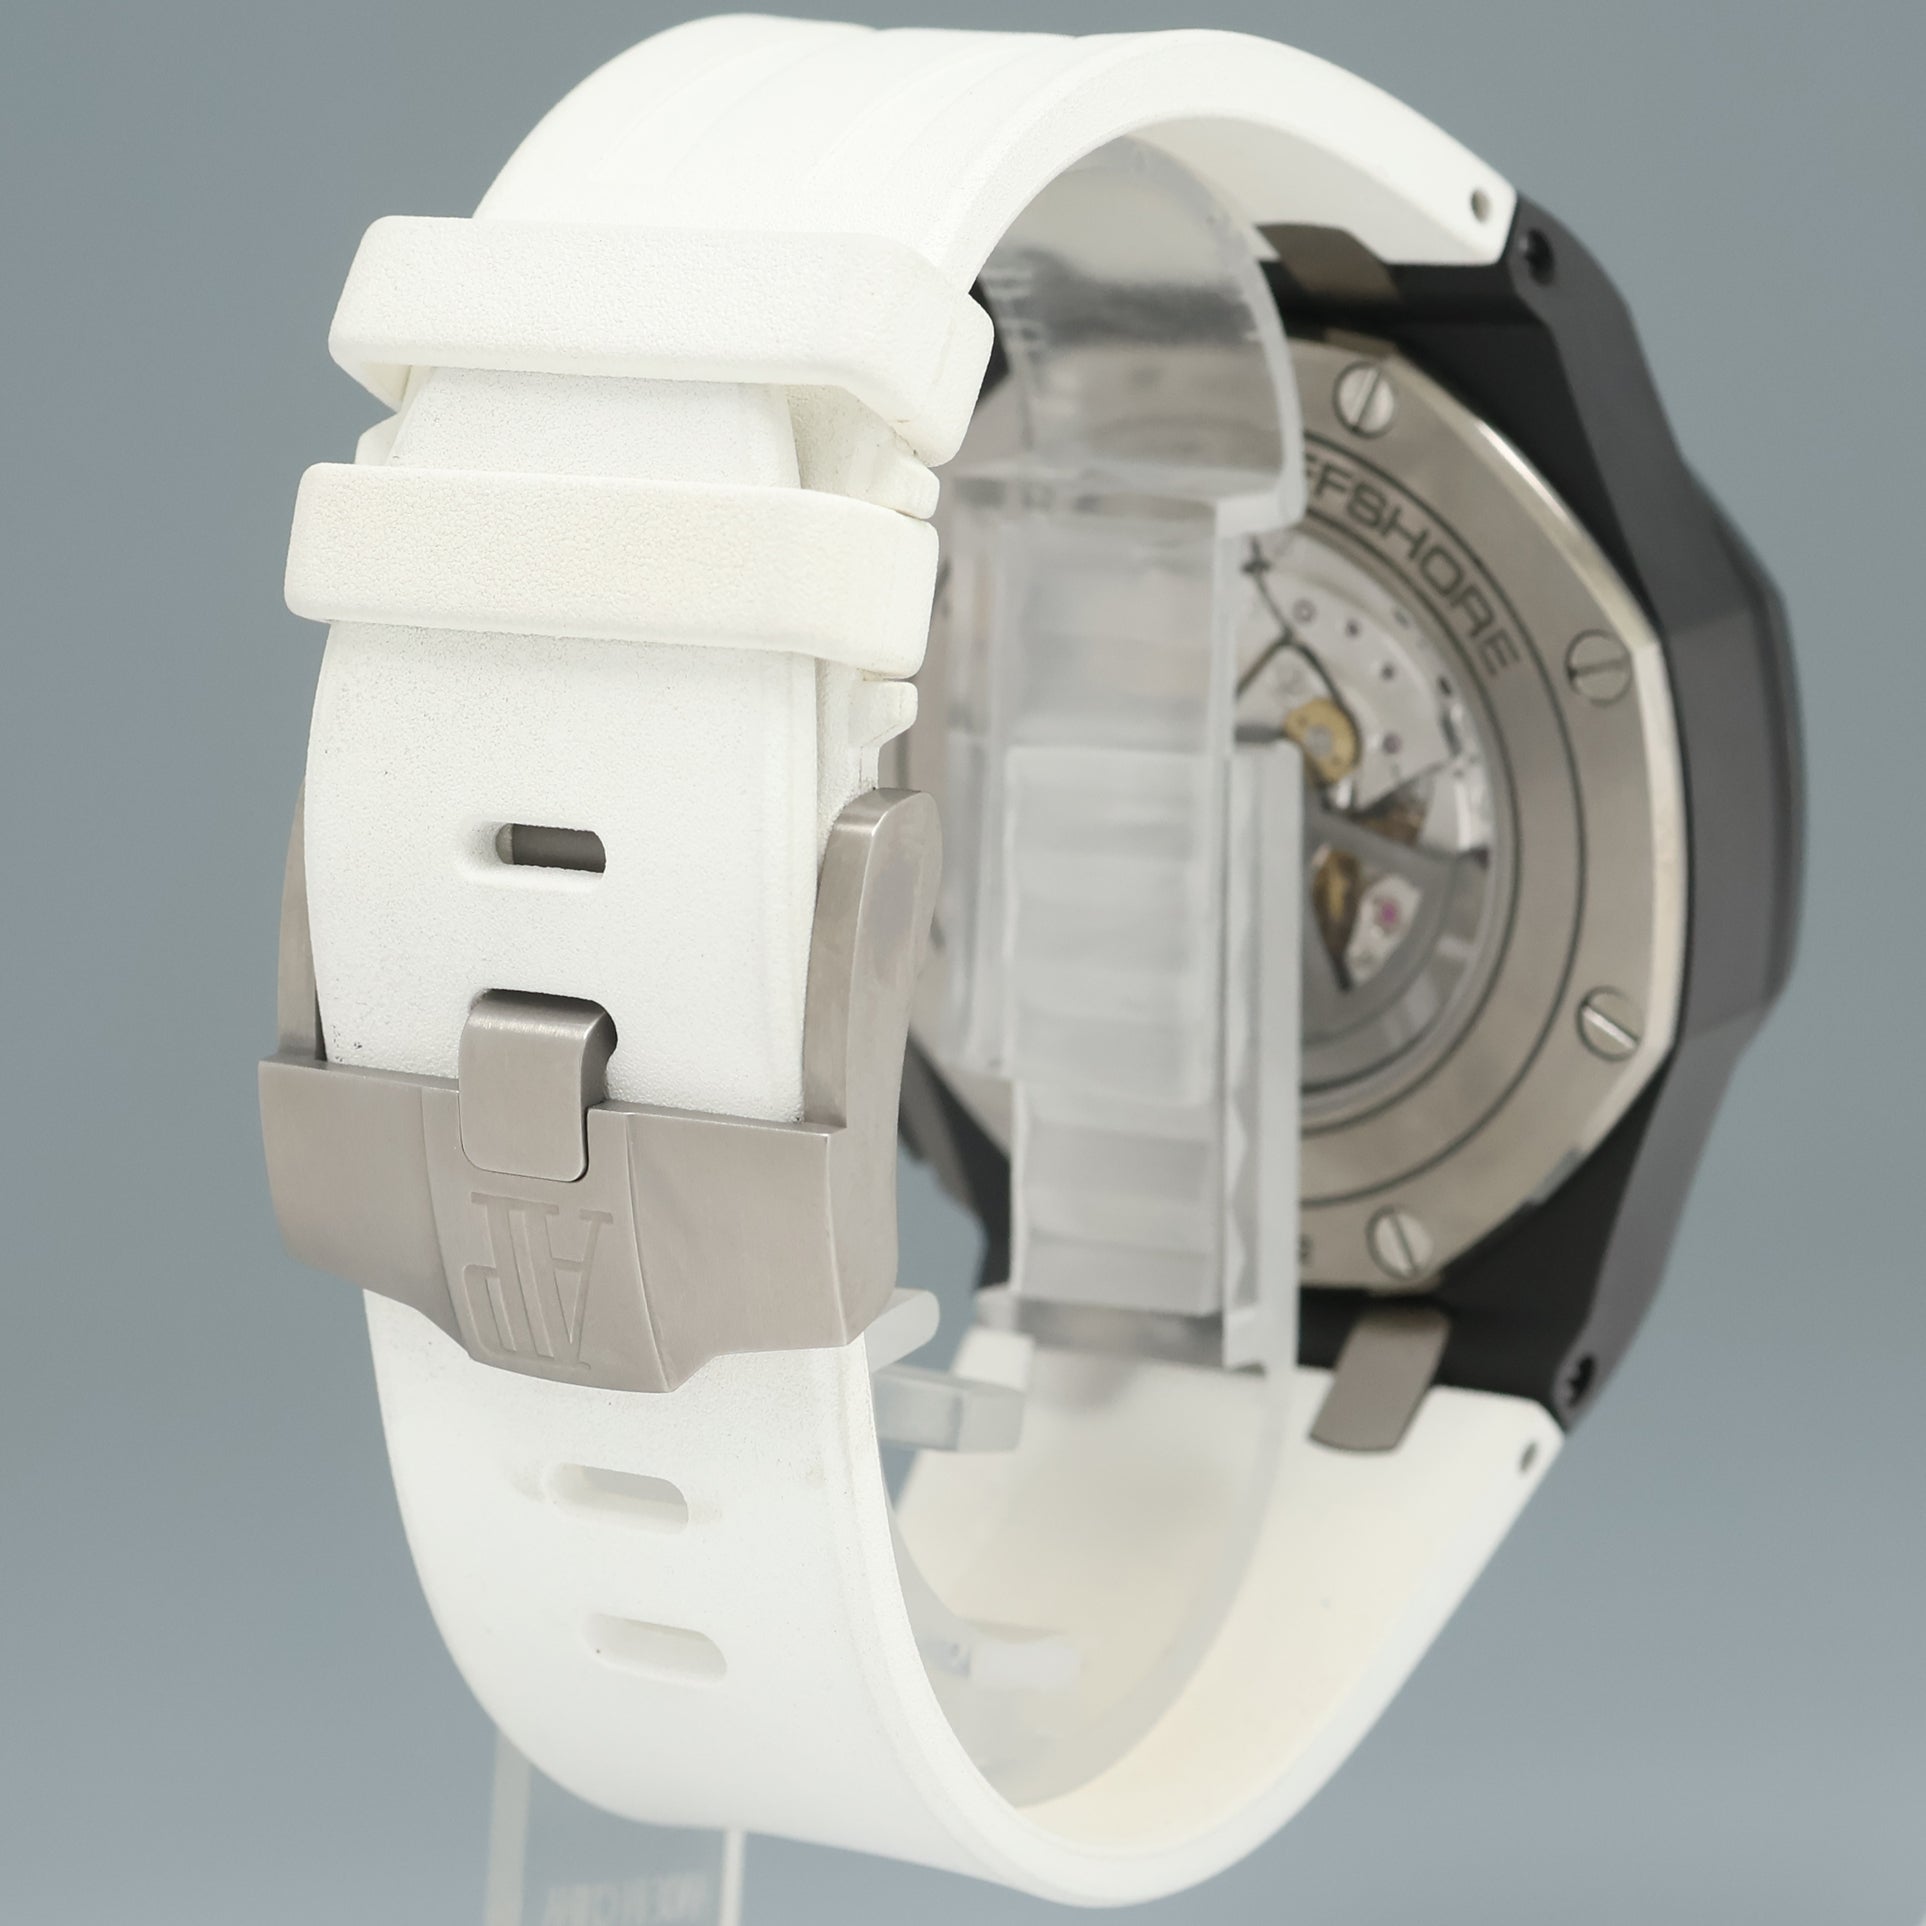 Audemars Piguet Royal Oak Offshore Ceramic Steel Panda 26405 44mm Chrono Watch